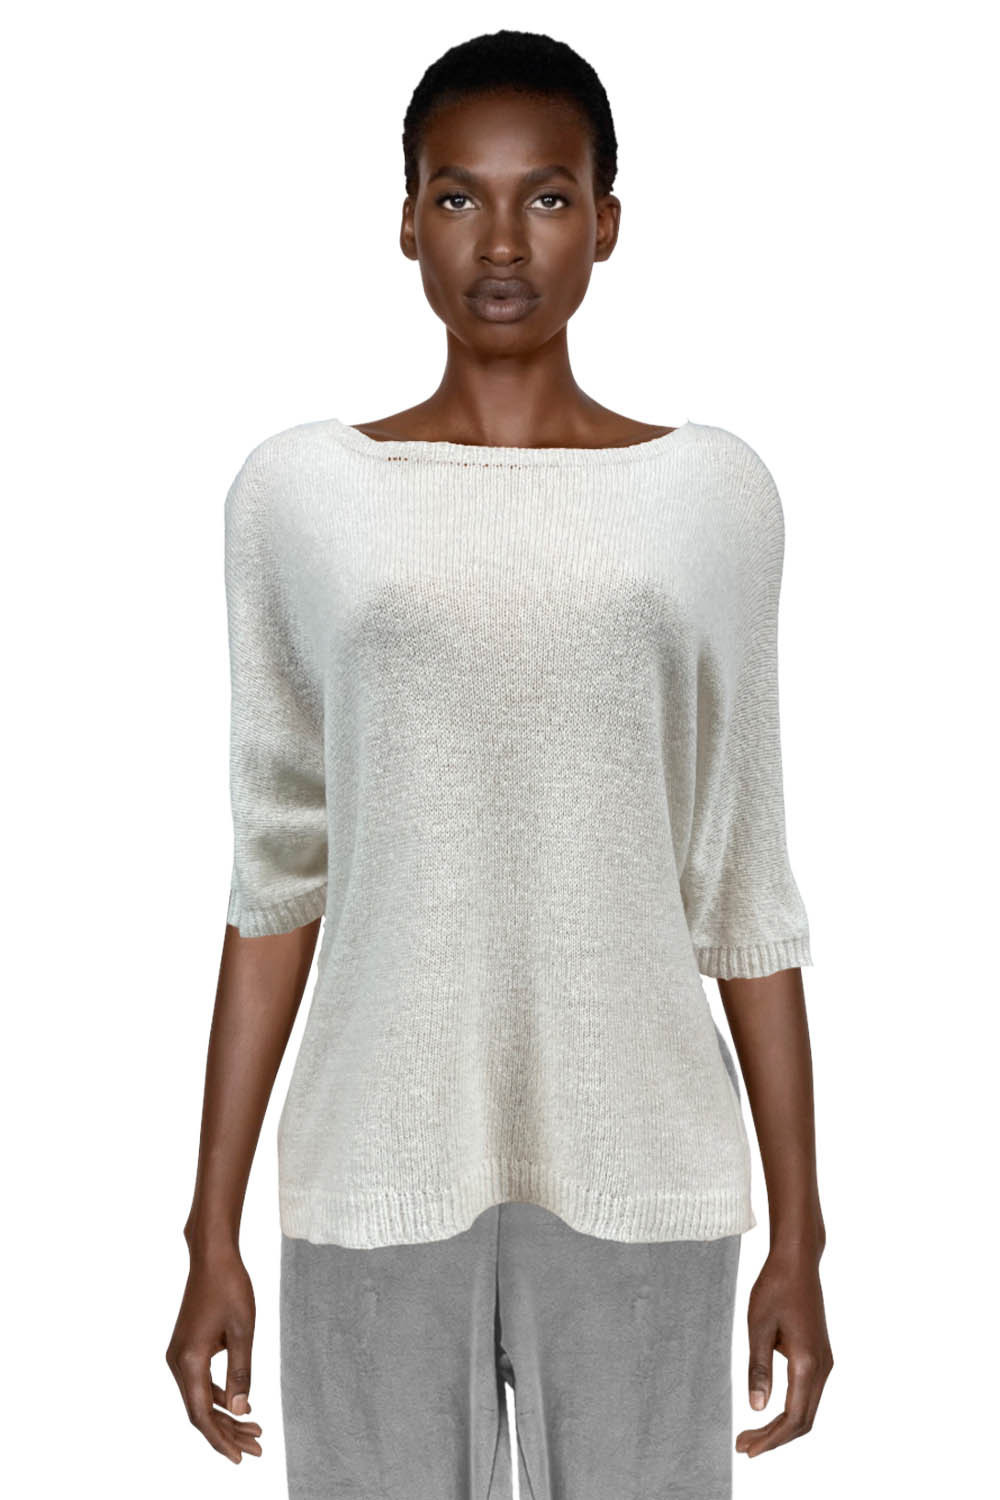 Short-sleeved cream knit top